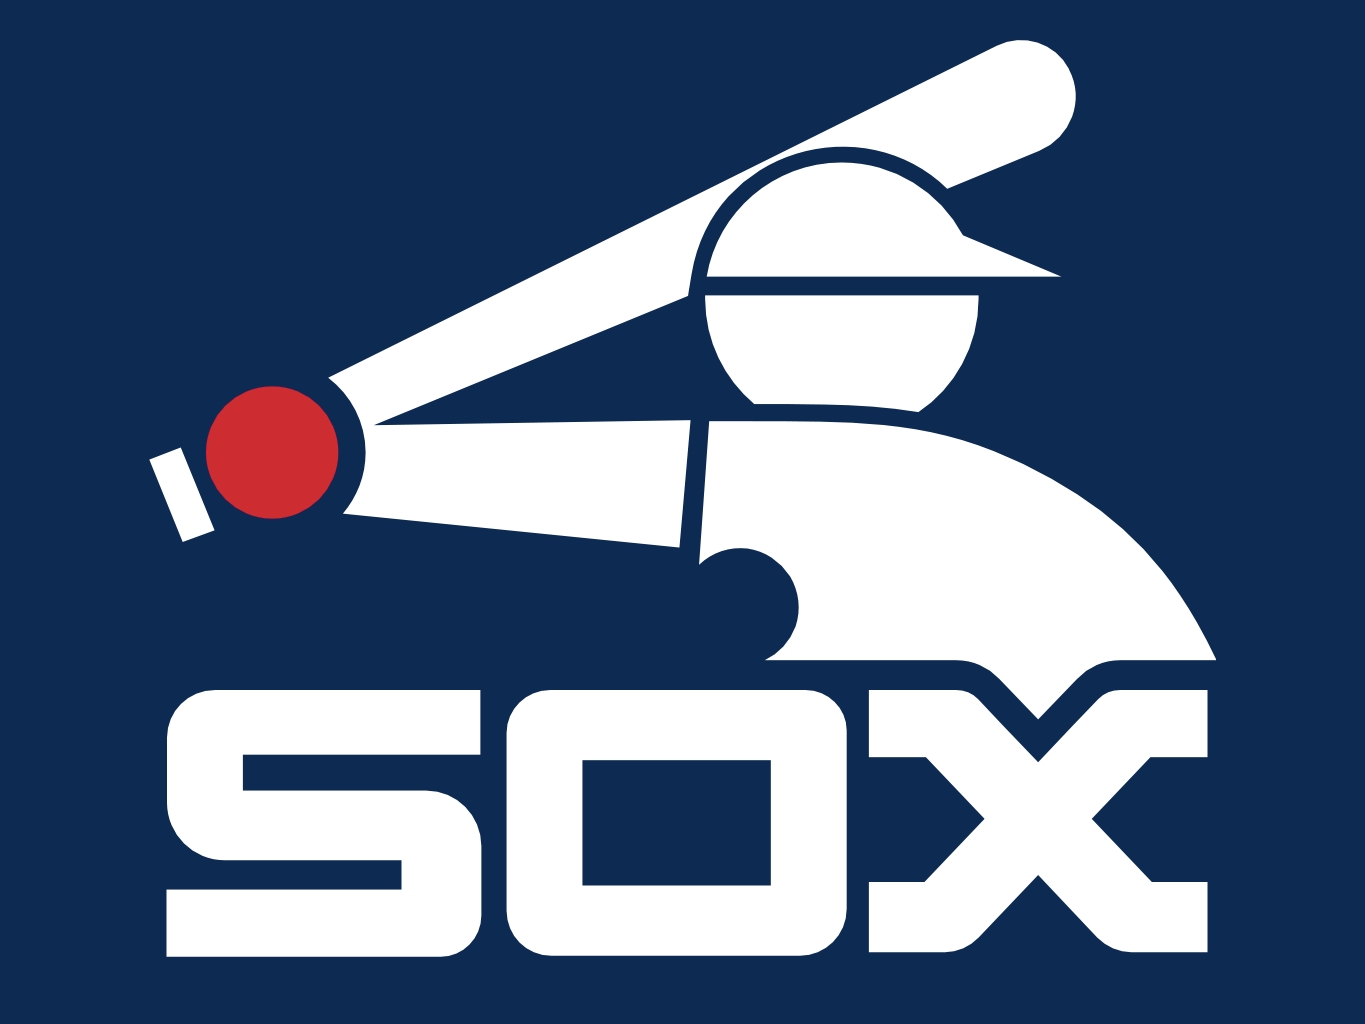 White Sox Legend Minoso Passes Away